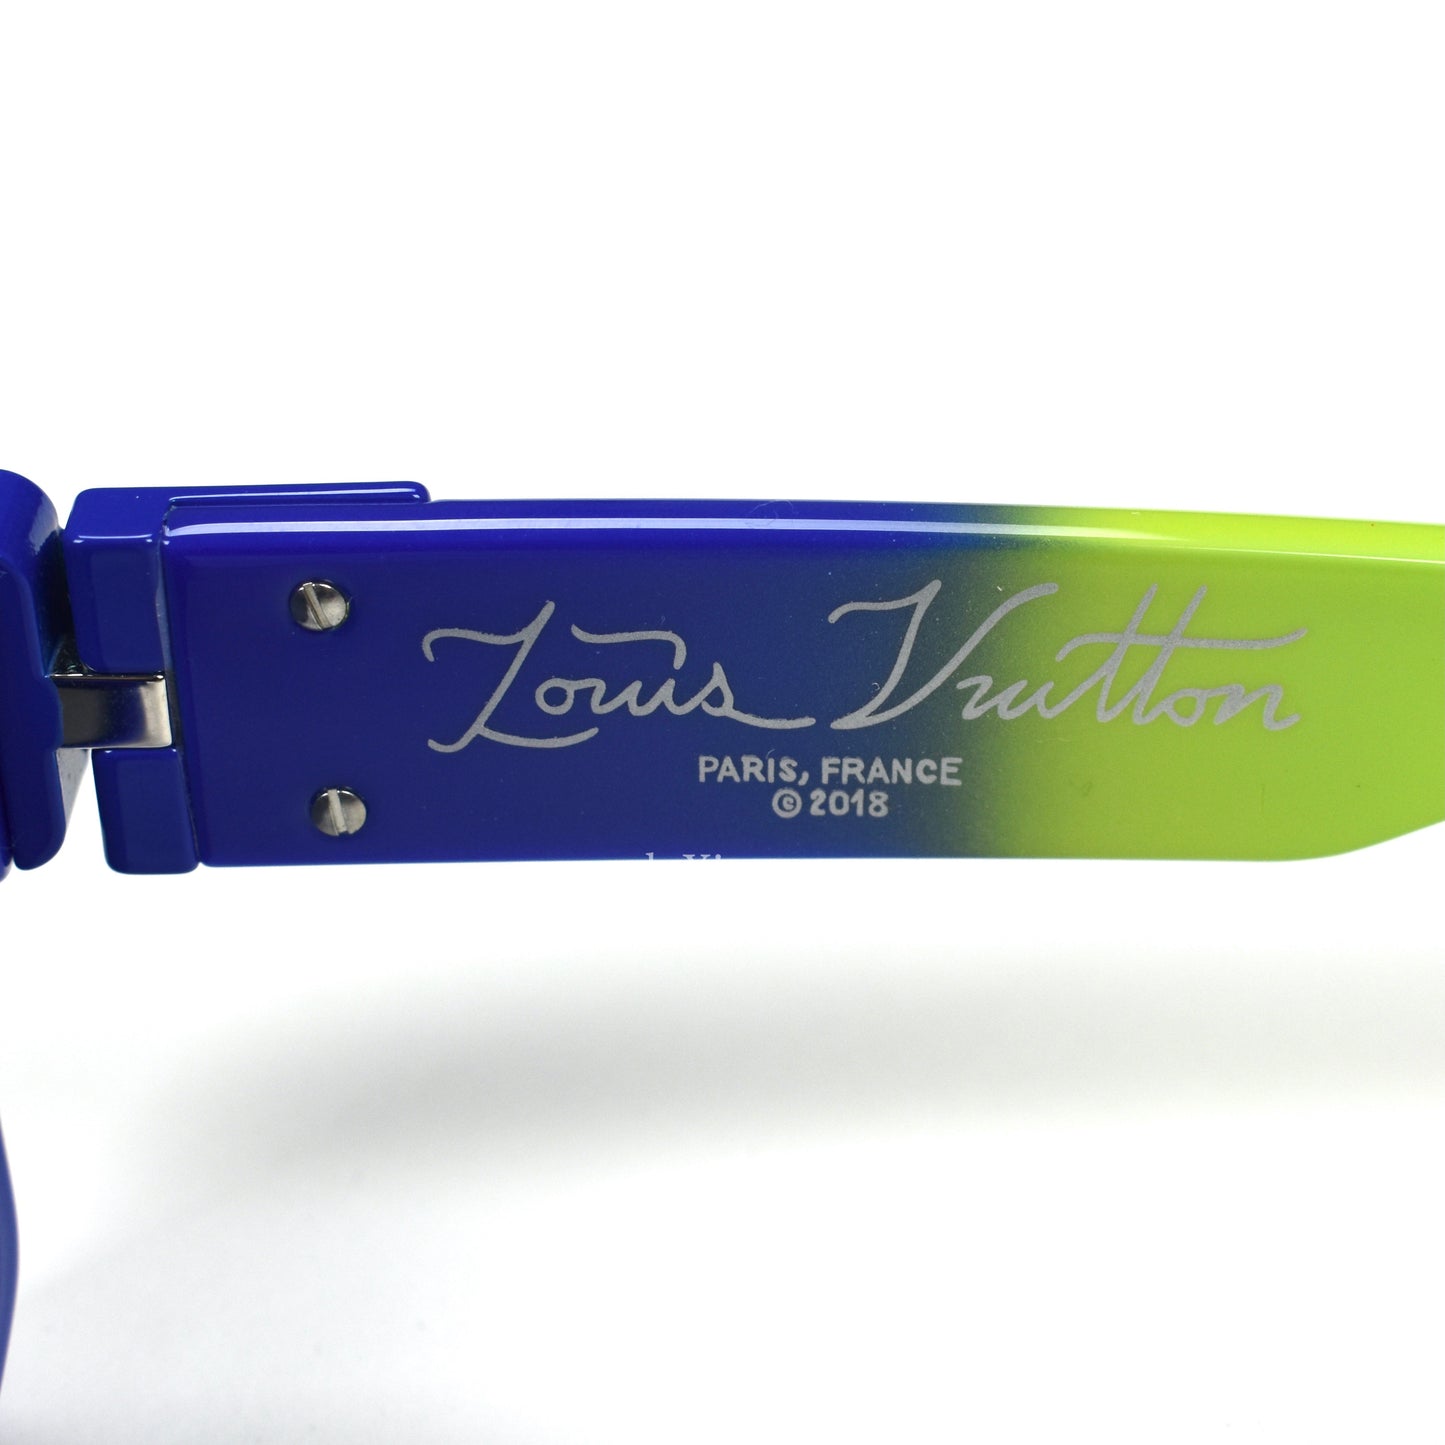 Louis Vuitton - 1.1 Millionaires Sunglasses Illusion Gradient